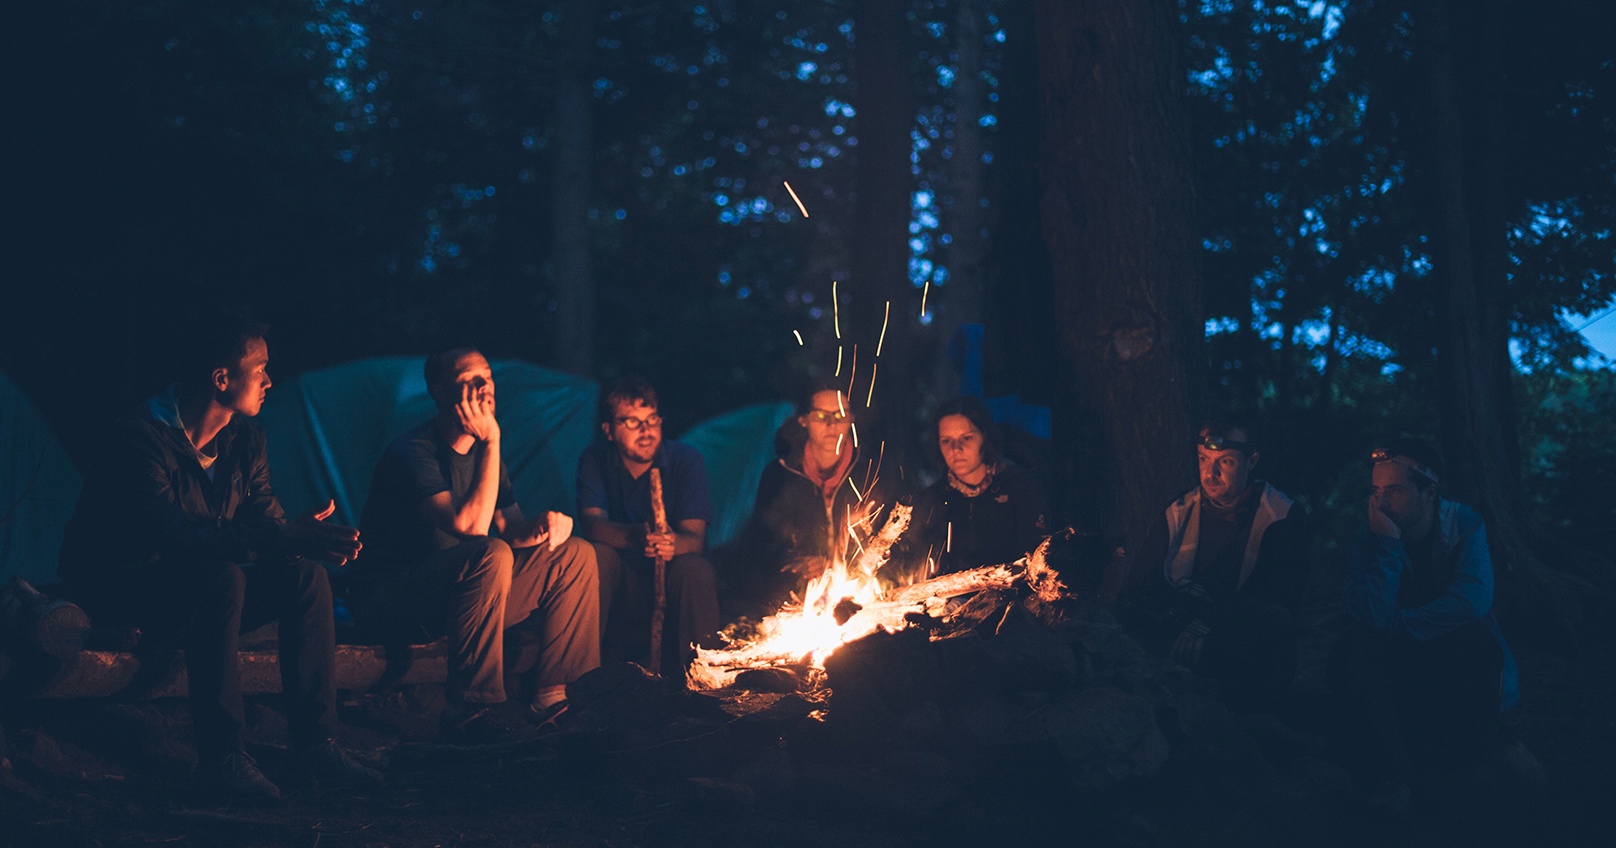 blog image - campfire